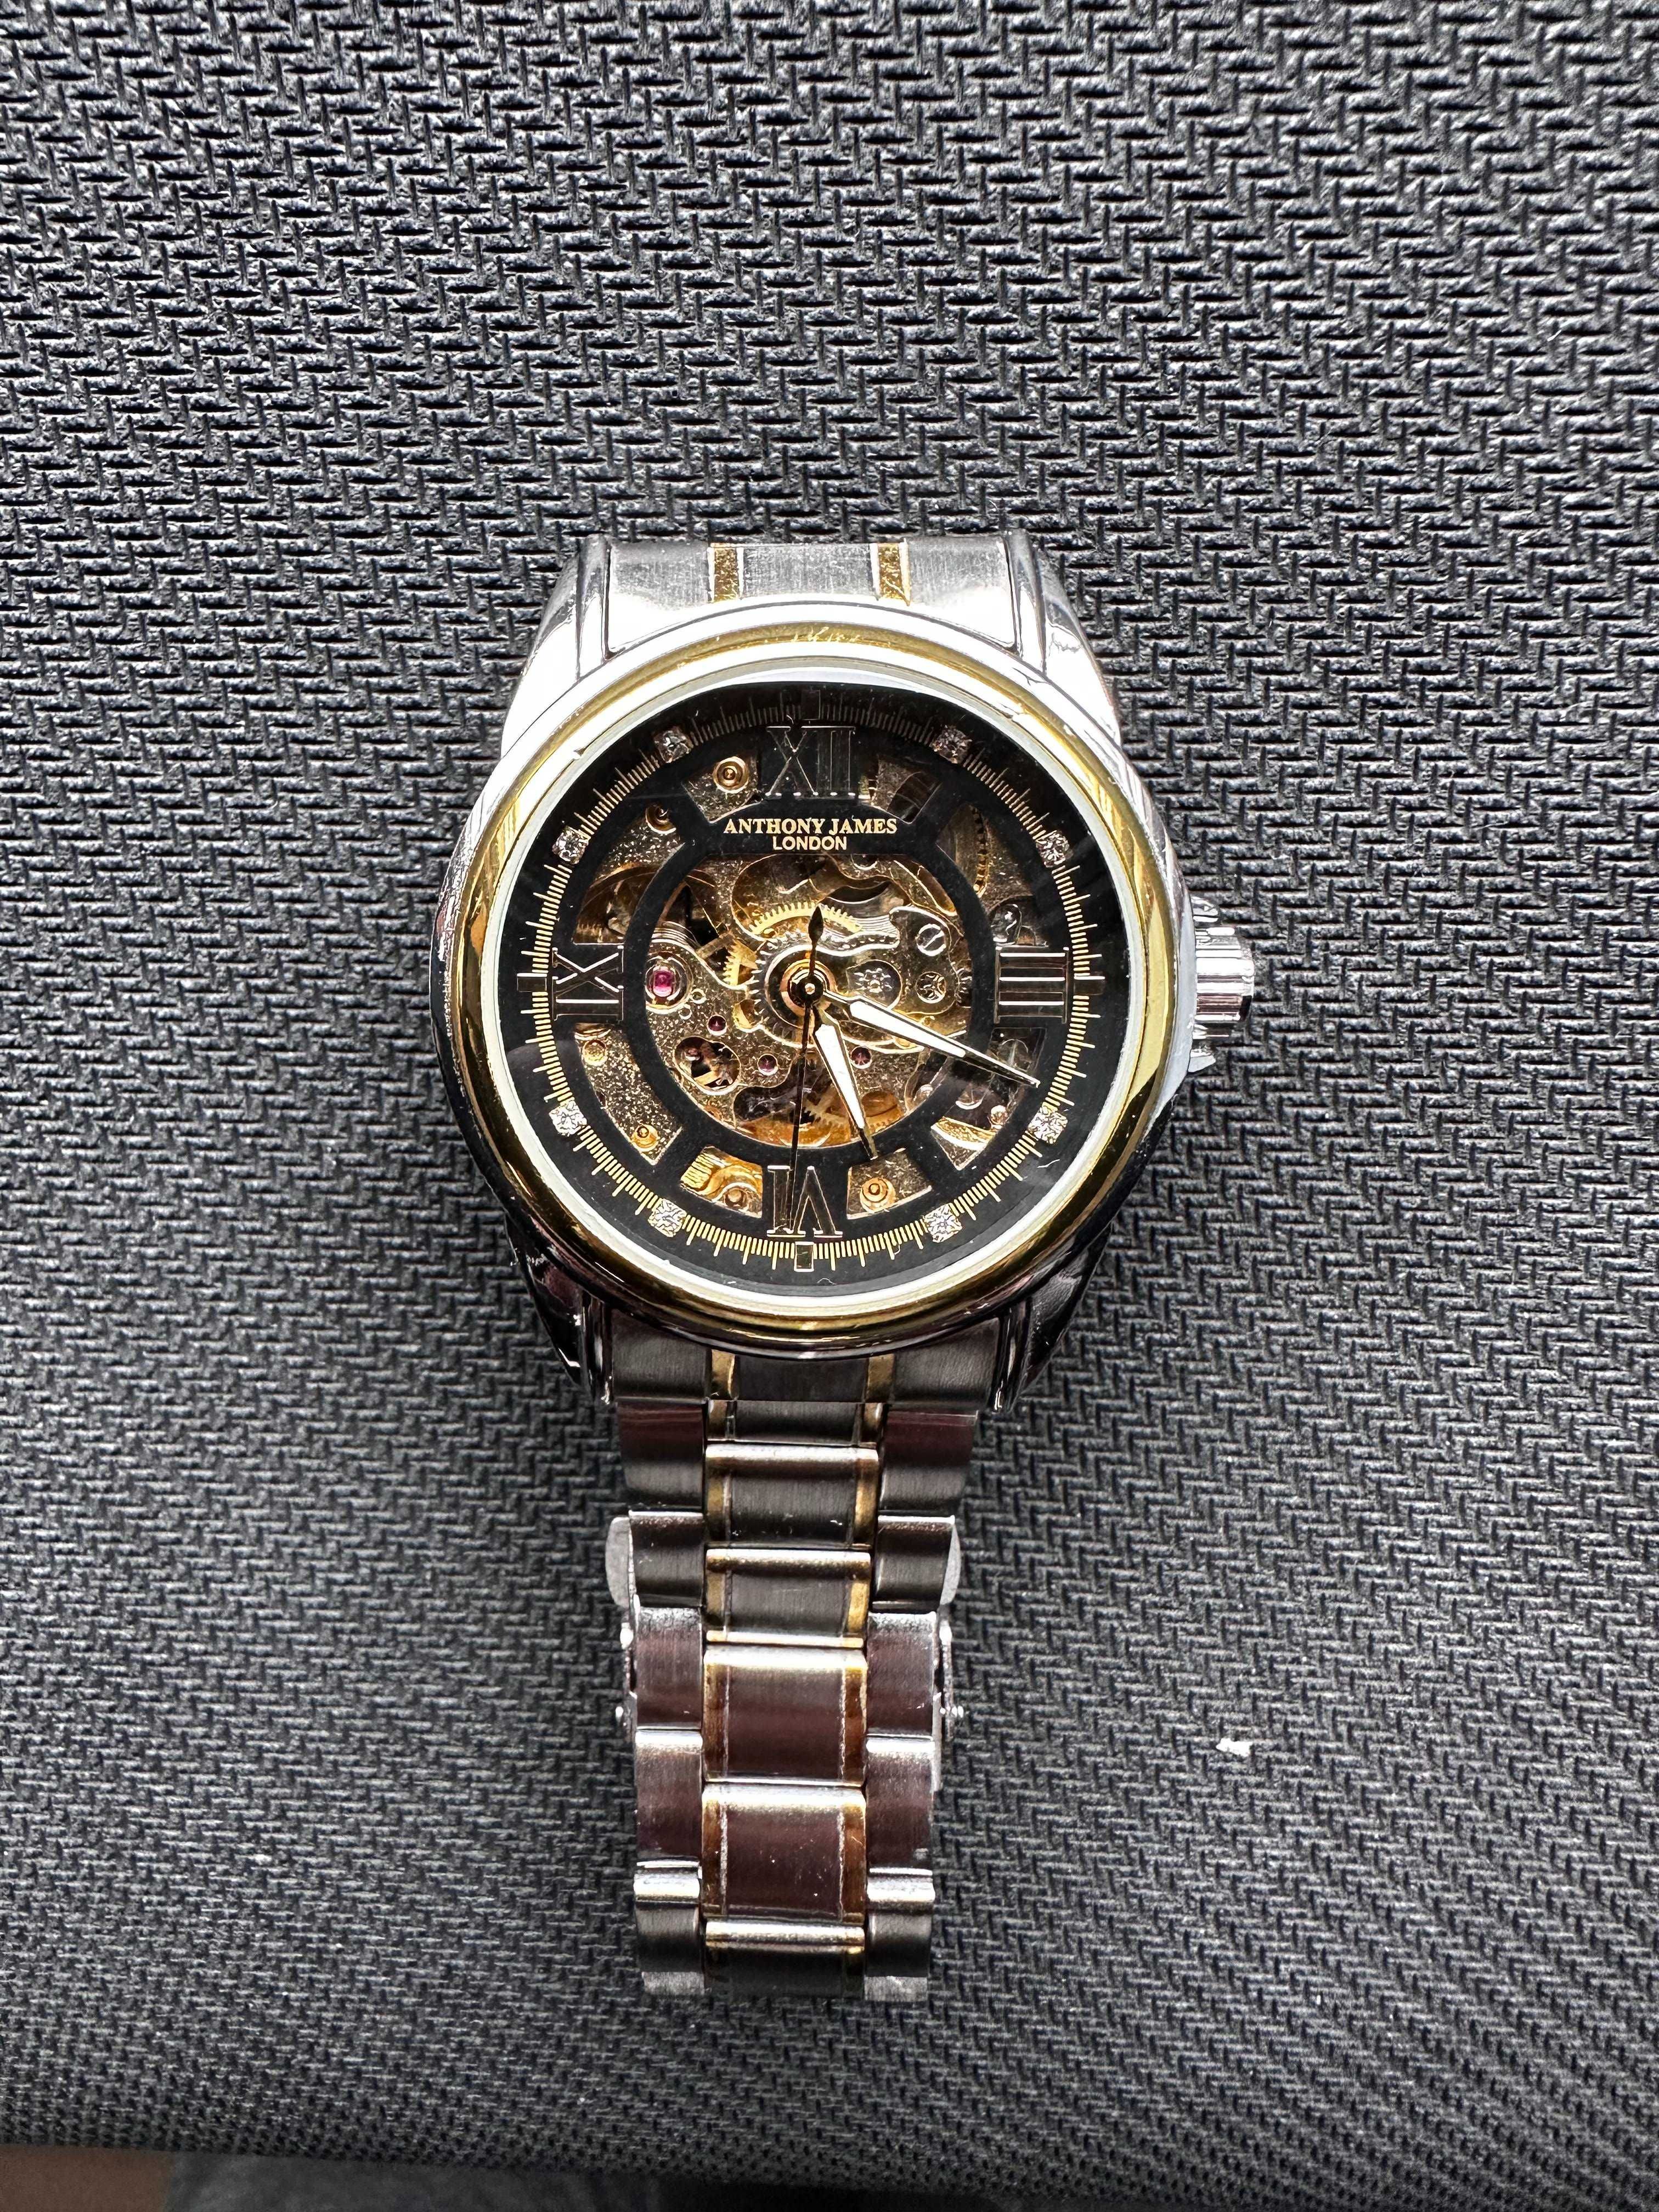 Мъжки часовник Anthony James Limited Edition Skeleton (Автоматичен)